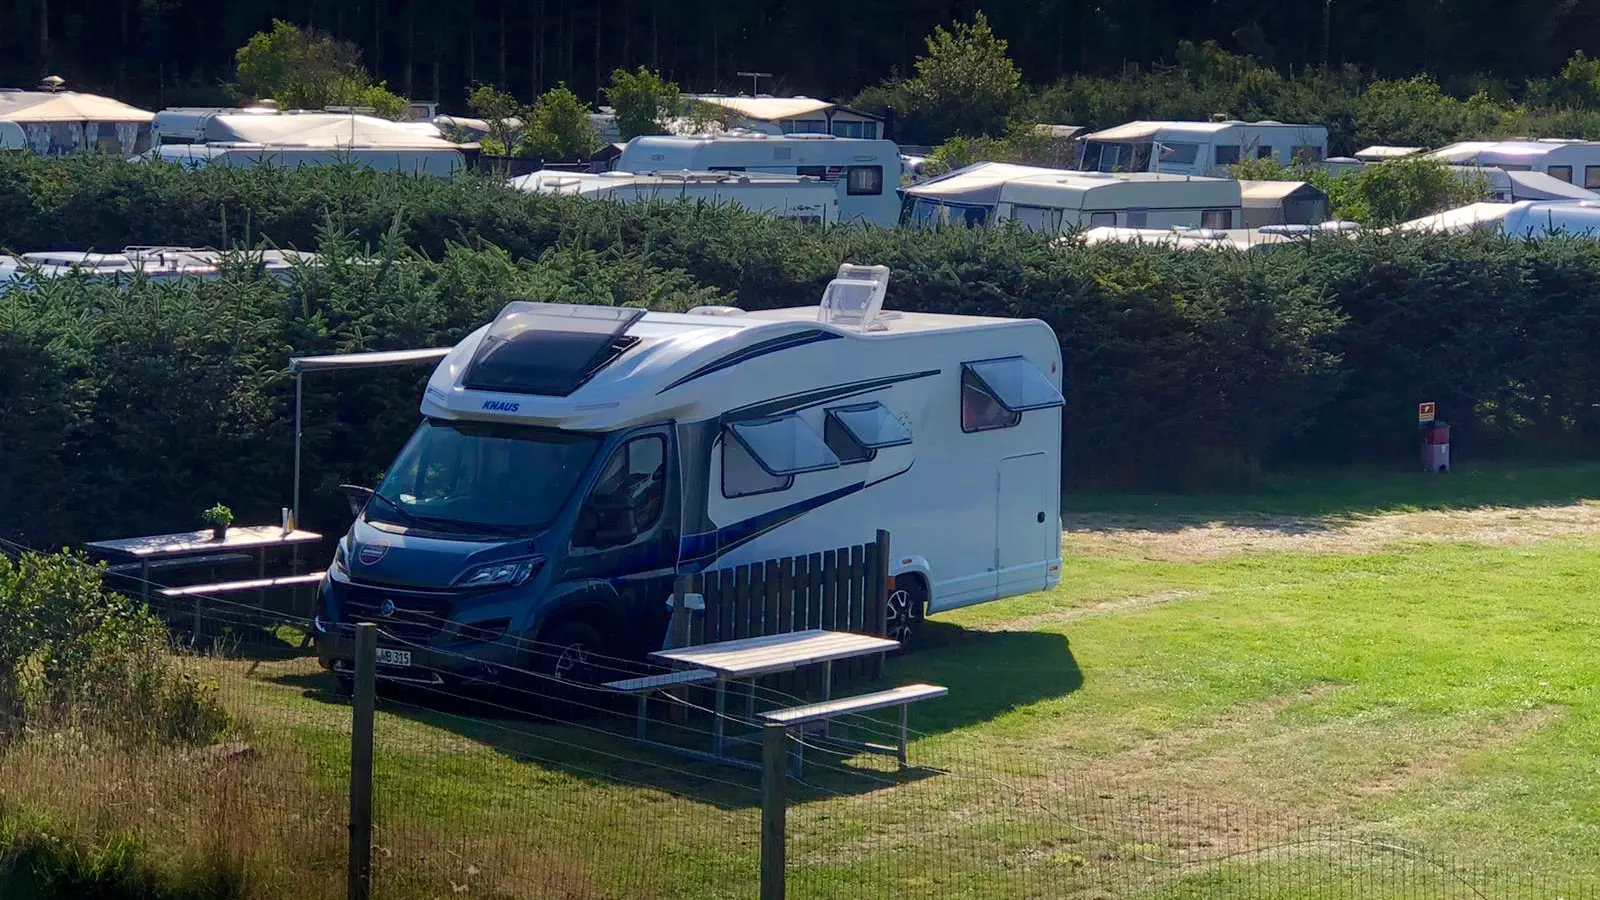 Dänemark-Rundreise im Sommer 2020: Knaus Wohnmobil auf dem Campingplatz Grønhoj Camping